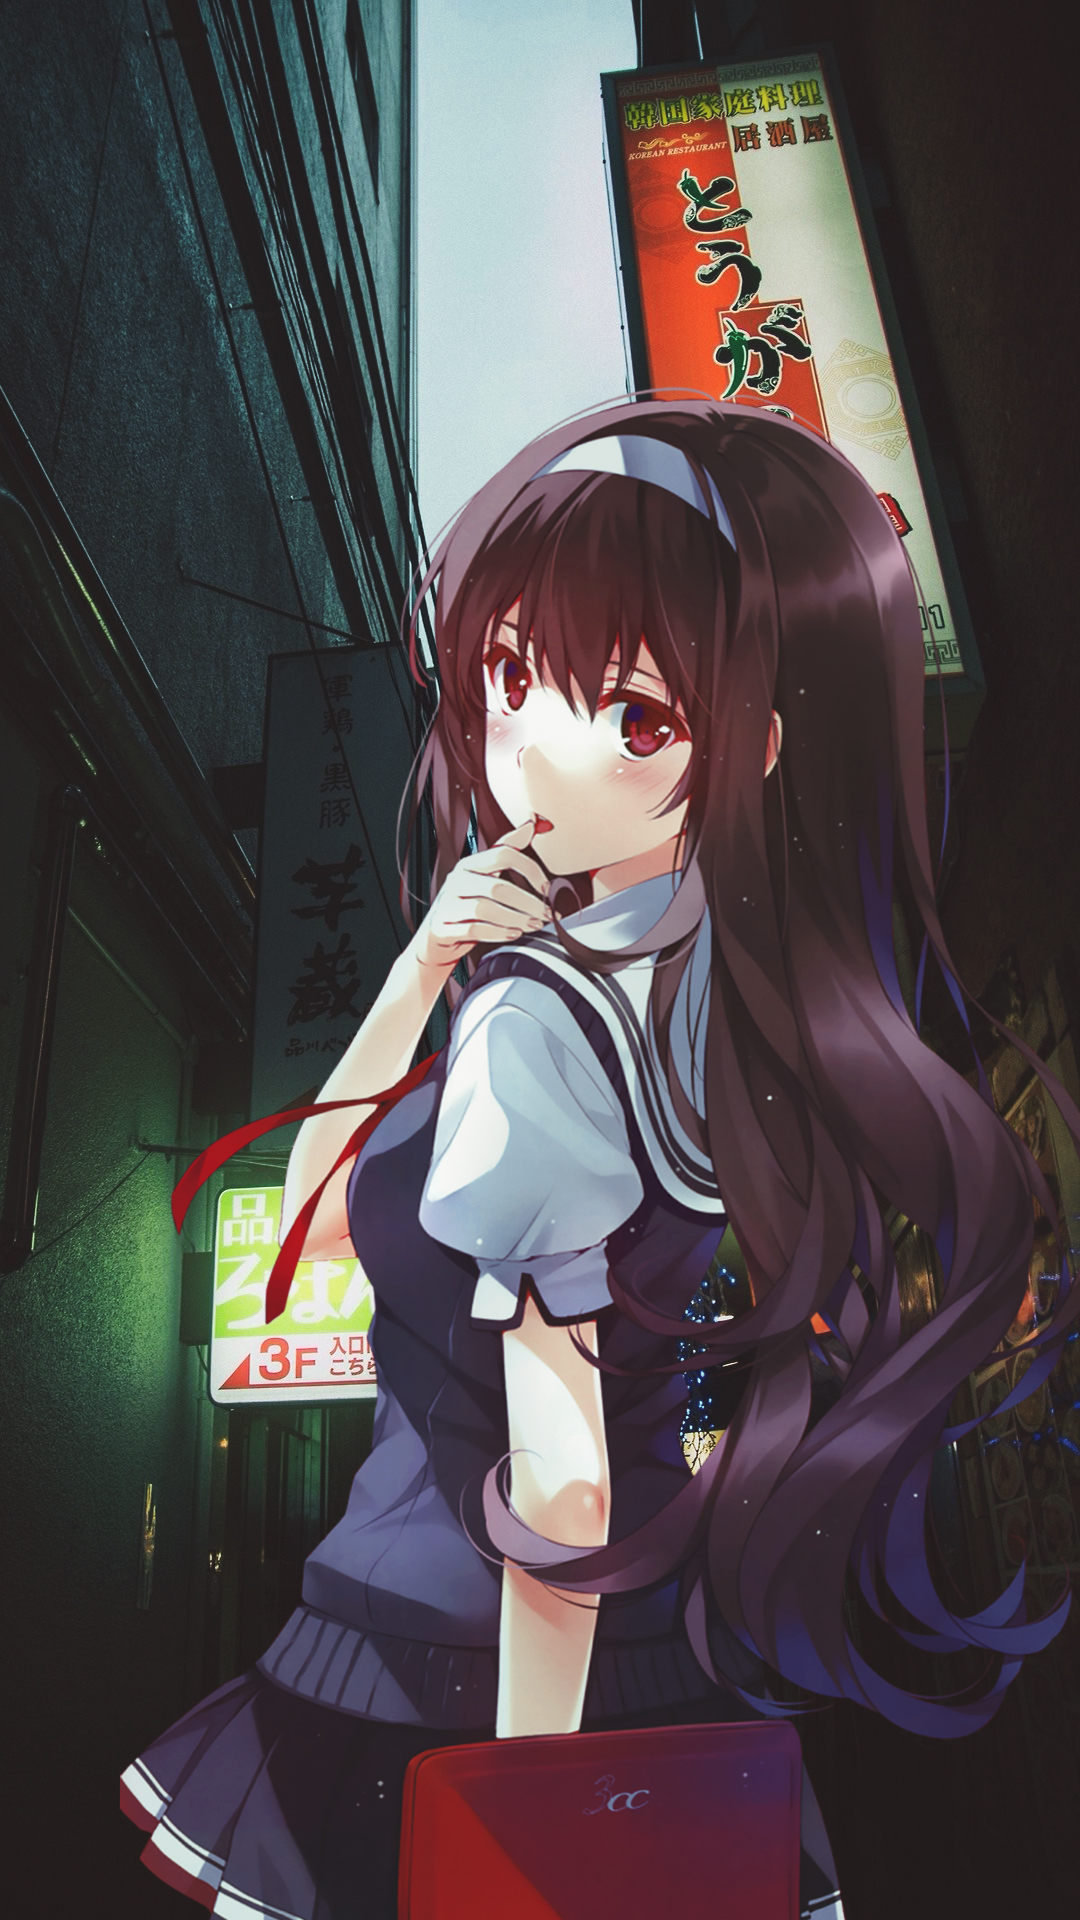 Cyberpunk anime teen girl, cyborg, android,... - Stock Illustration  [100864766] - PIXTA